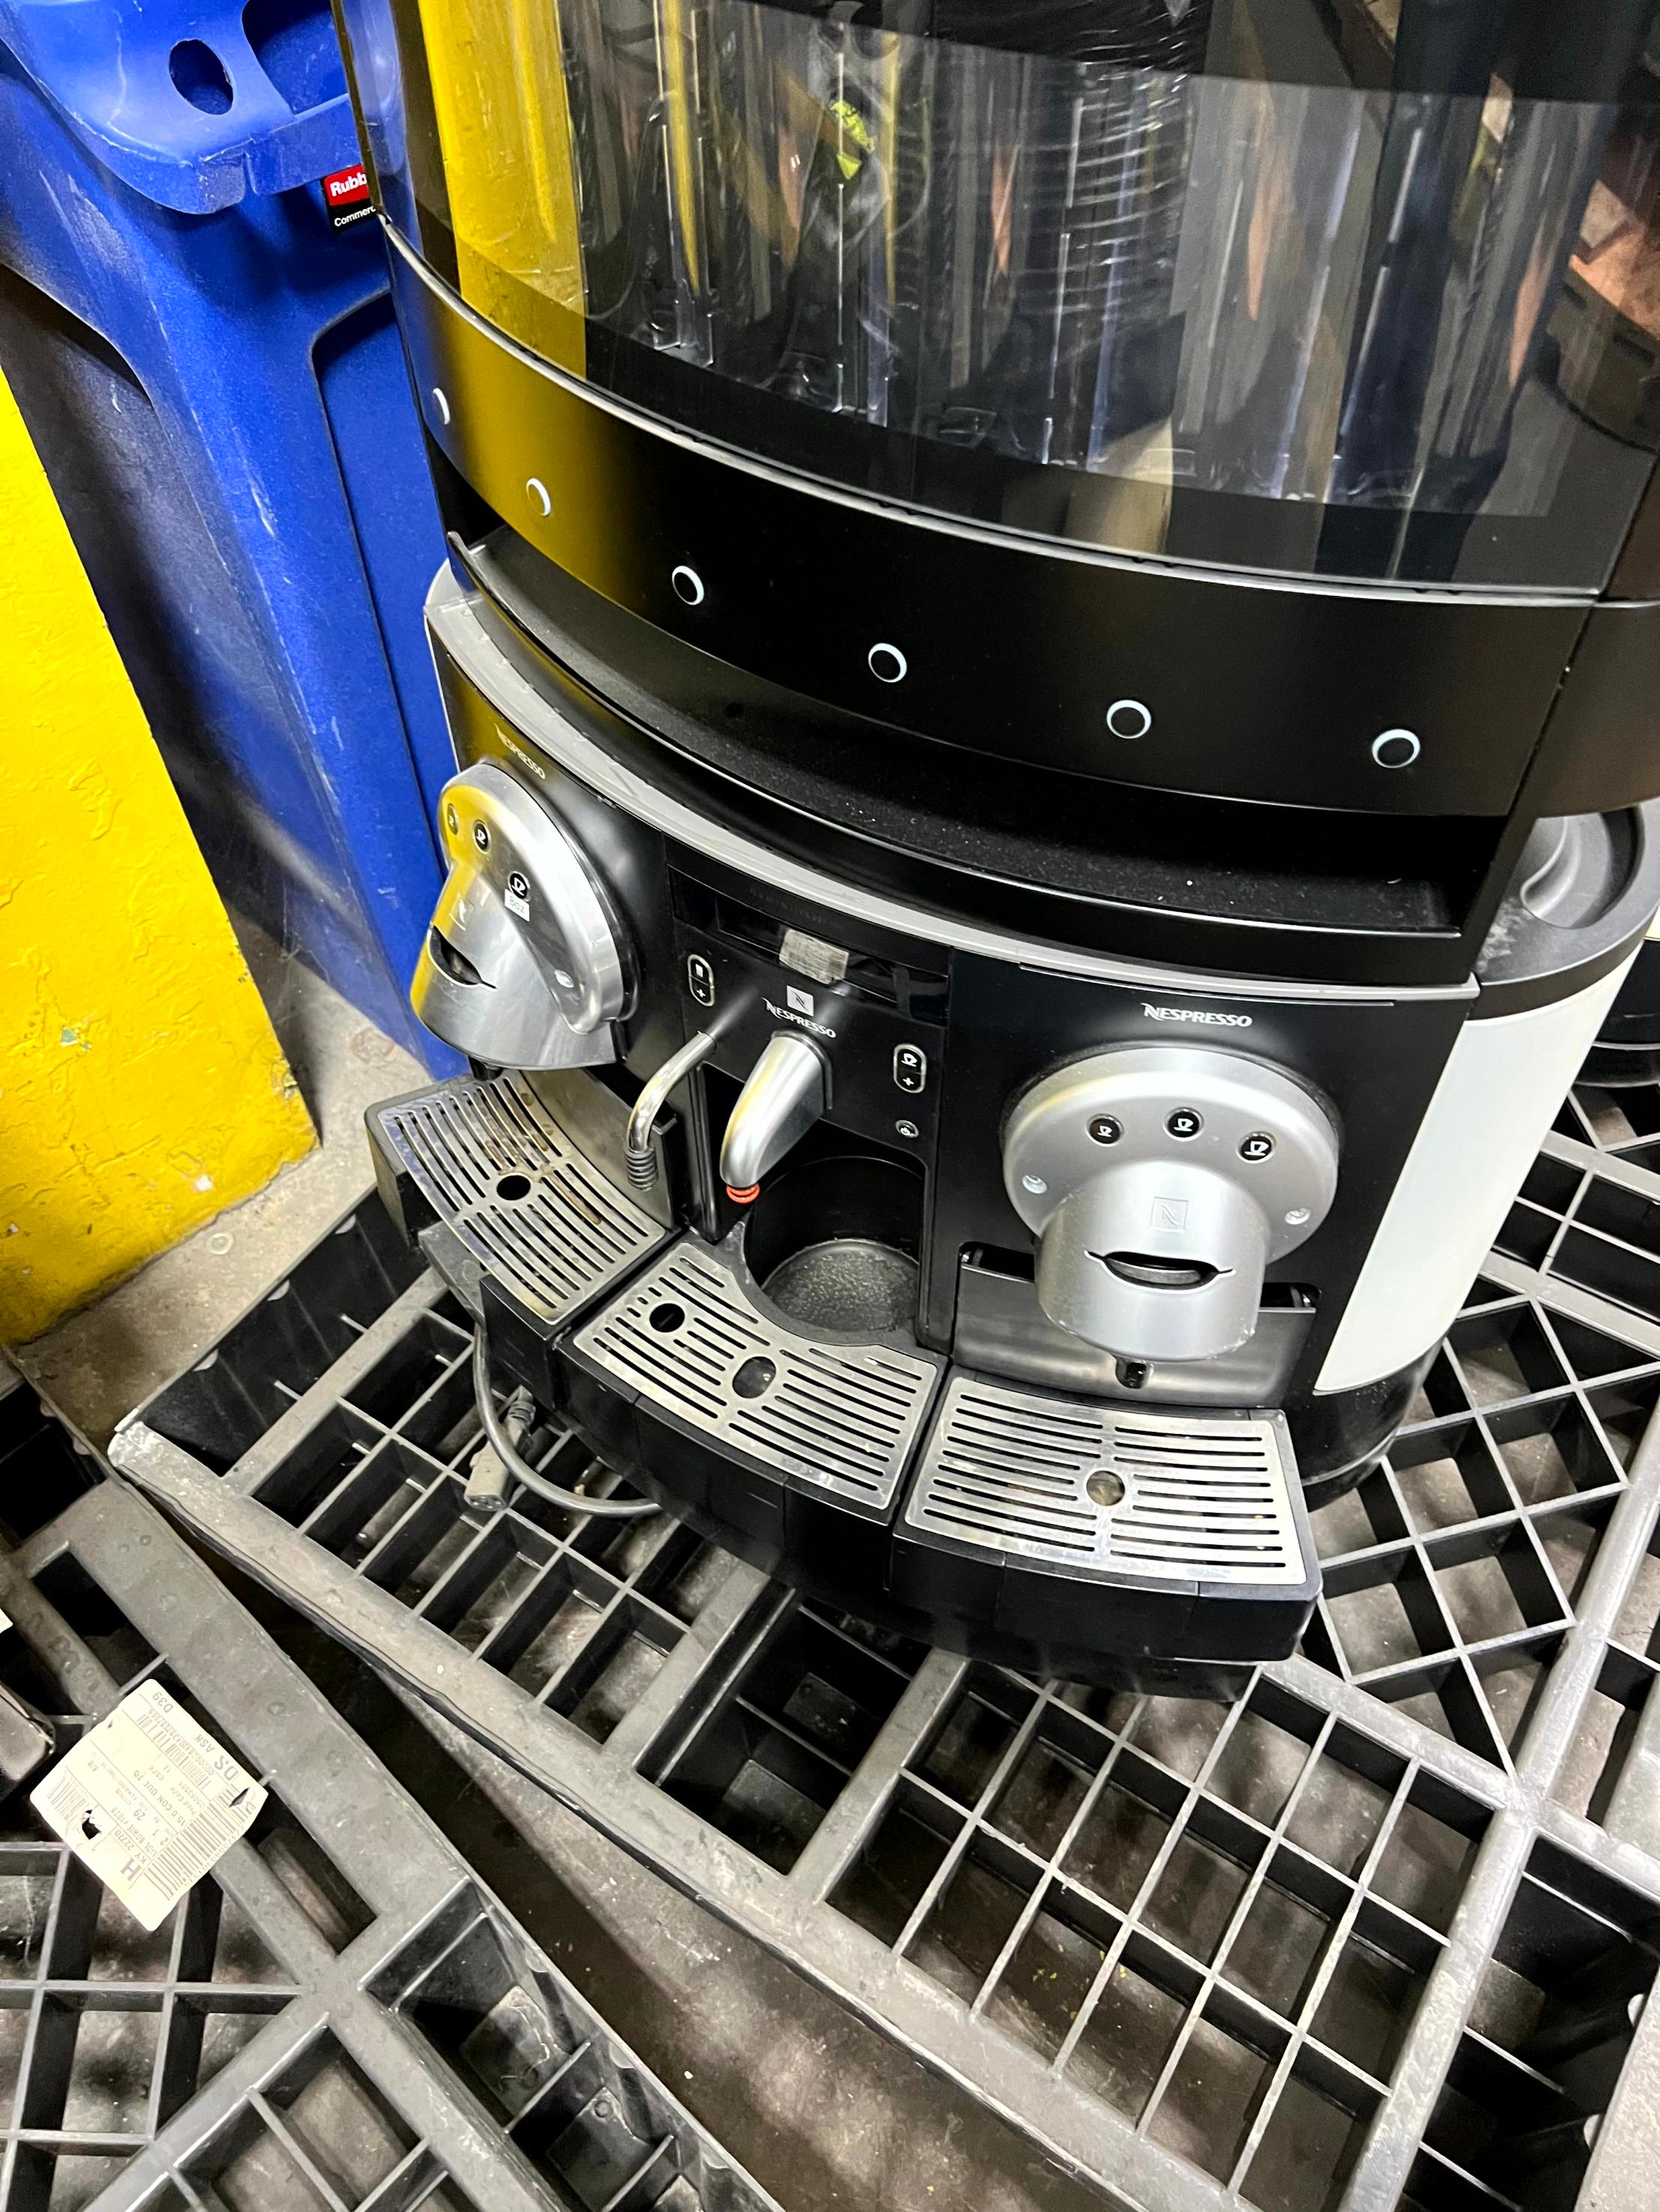 Nespresso Commercial Coffee Machine